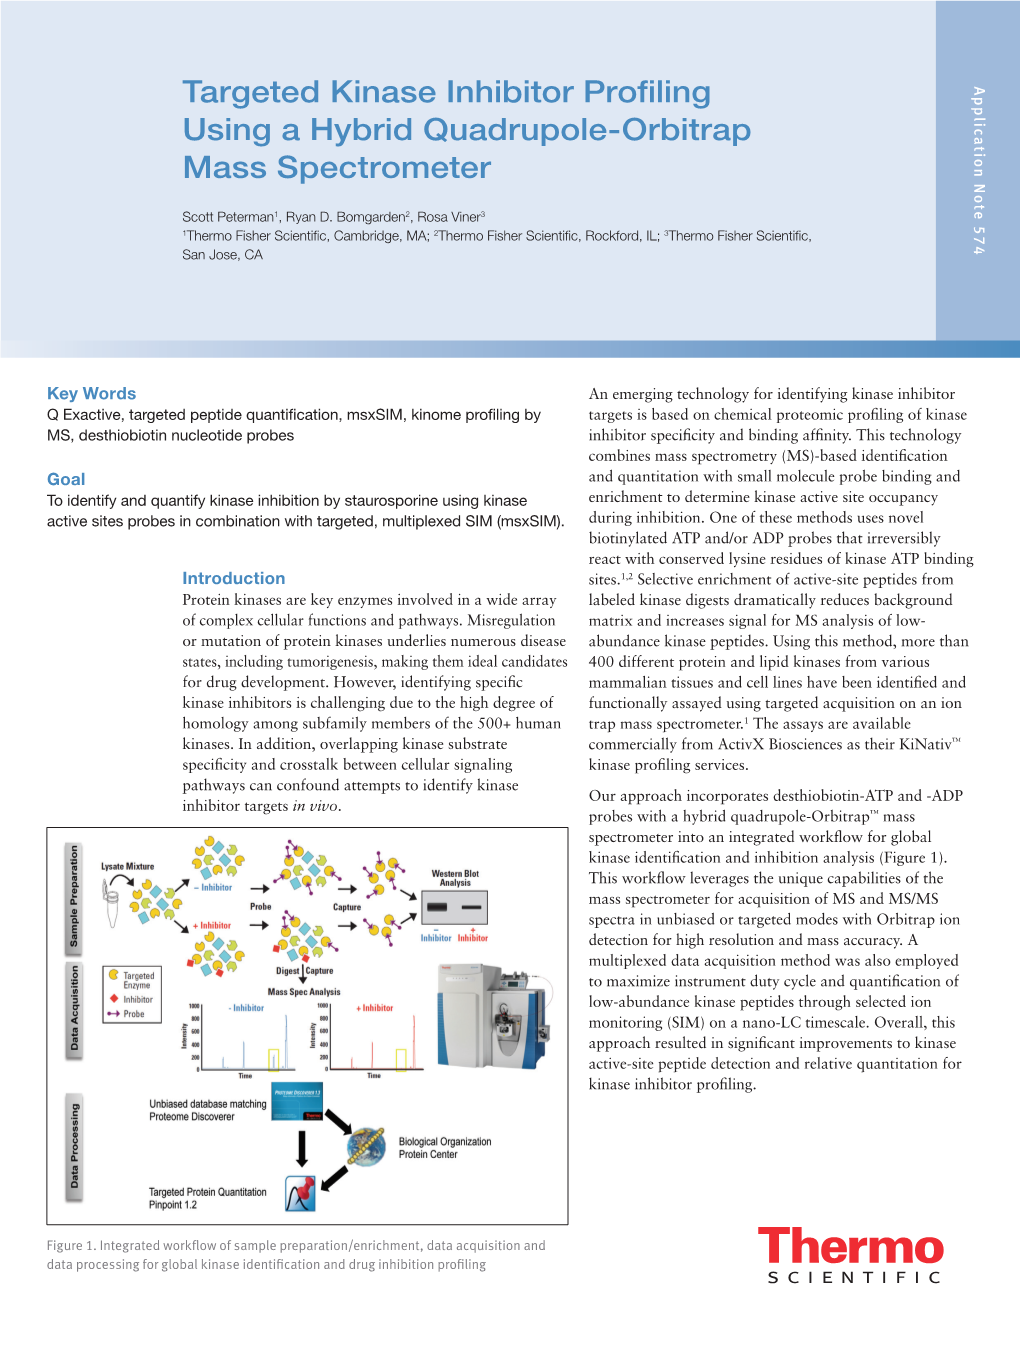 Targeted Kinase Inhibitor Profiling Using a Hybrid Quadrupole-Orbitrap Mass Spectrometer